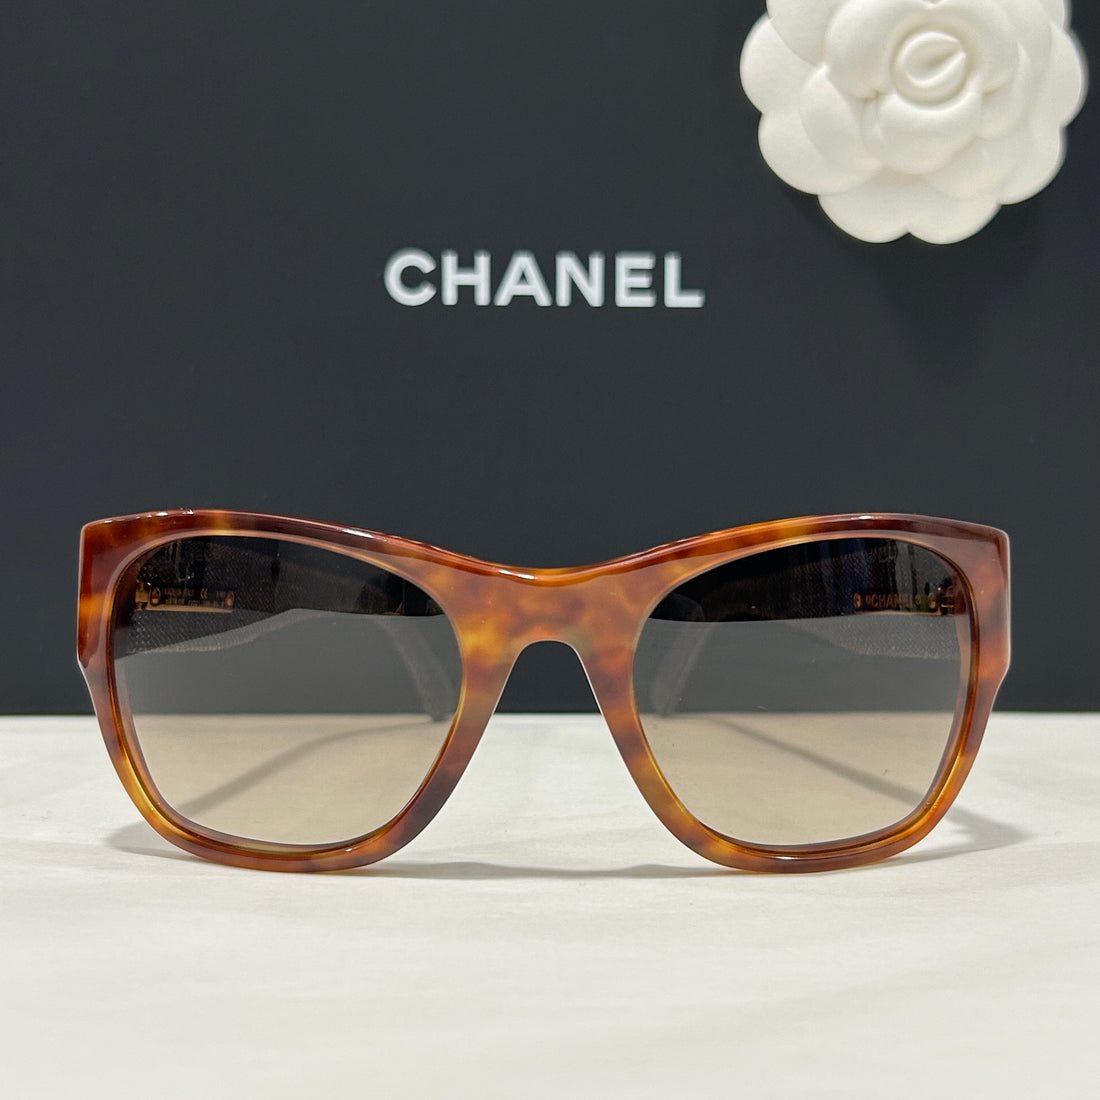 Chanel - Sunglasses